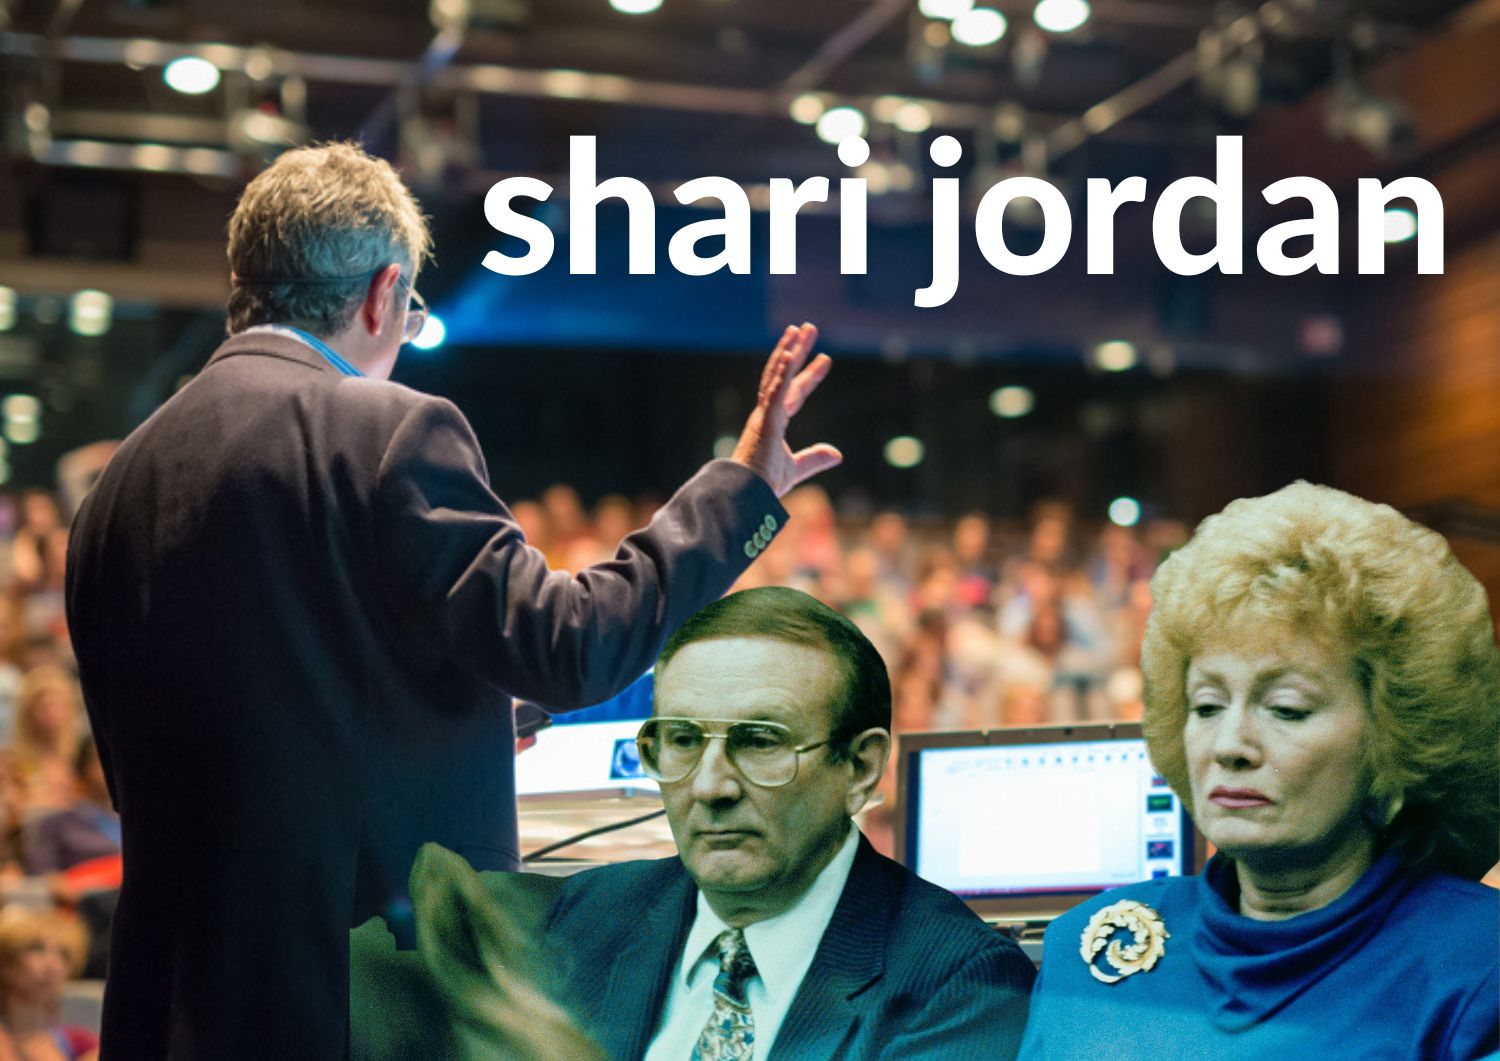 Shari Jordan: Everything Know About lionel dahmer shari jordan